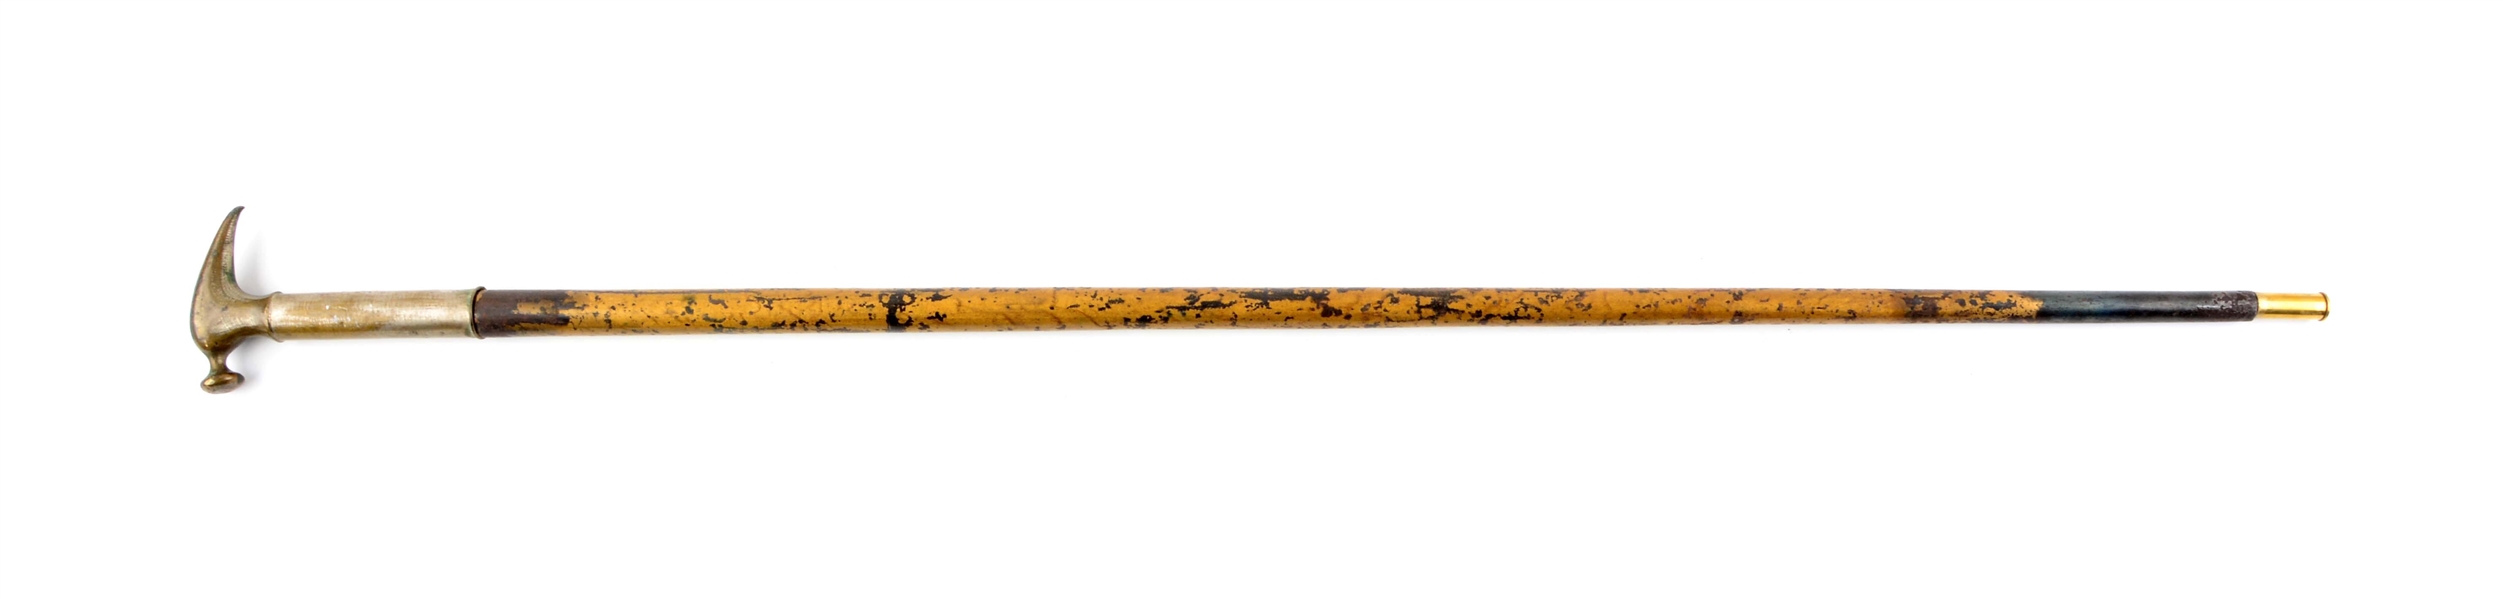 SMALL HAMMER HANDLE 19TH CENTURY SWORD CANE.